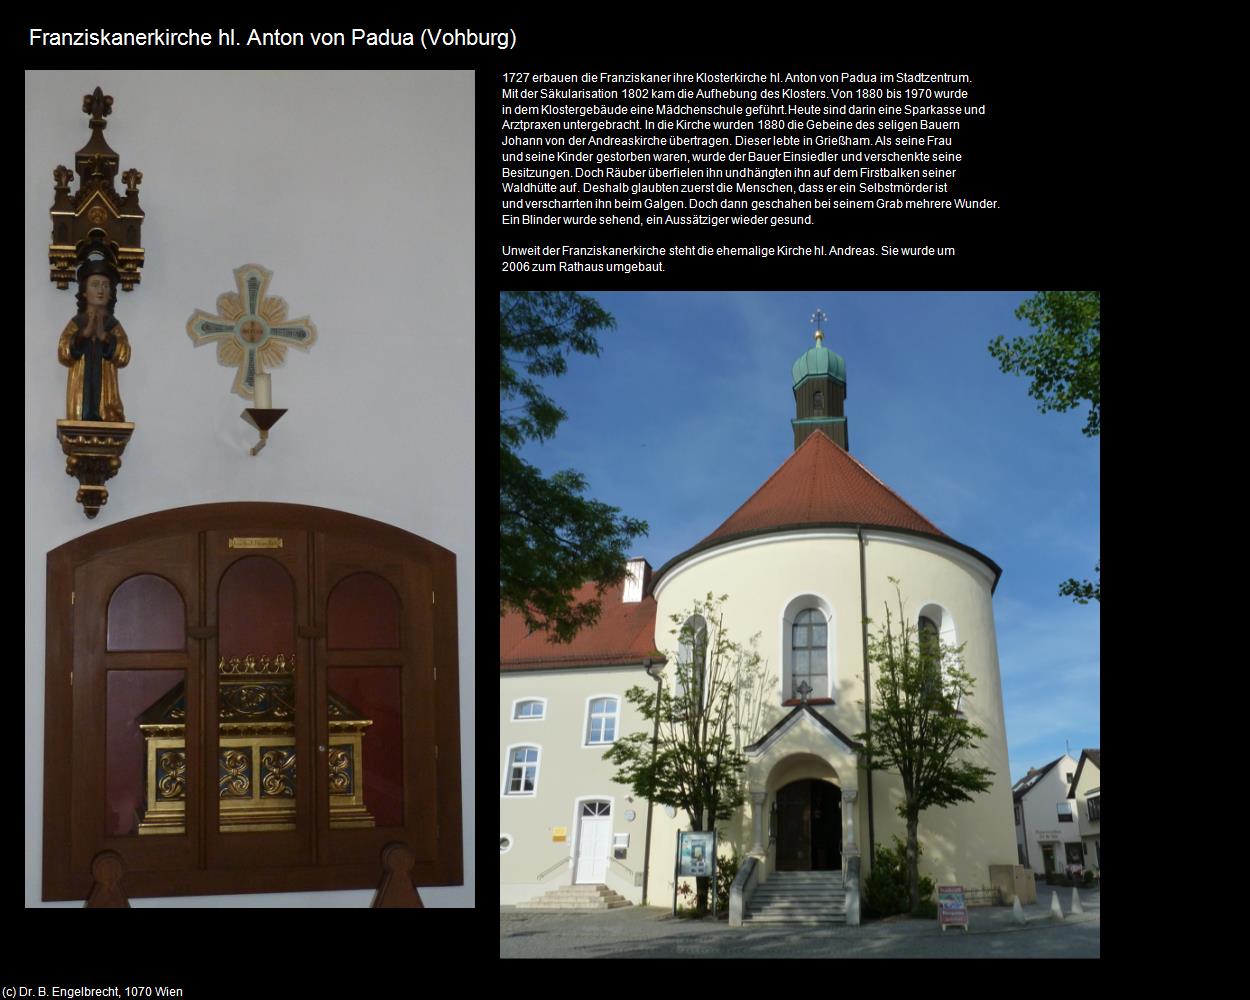 Franziskanerk. hl. Anton von Padua  (Vohburg ) in Kulturatlas-BAYERN